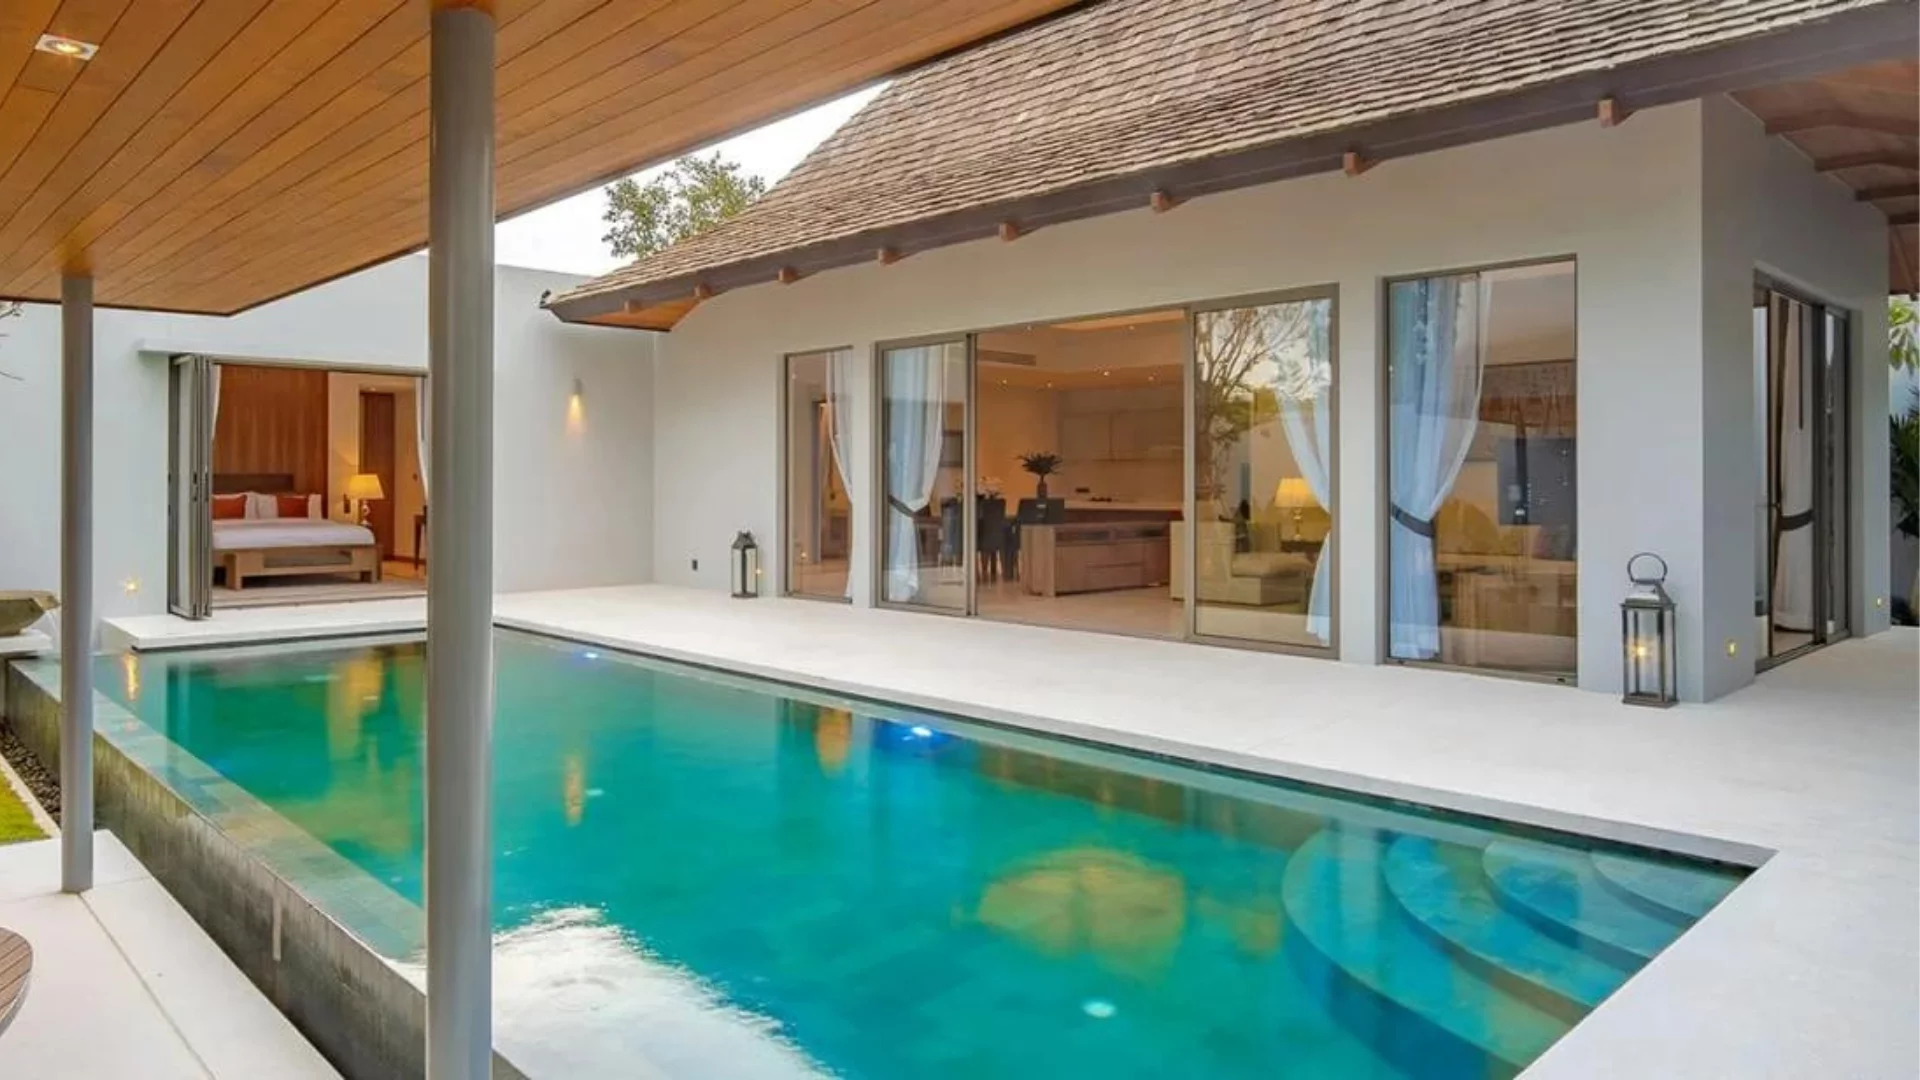 Pool in a villa in Thailand